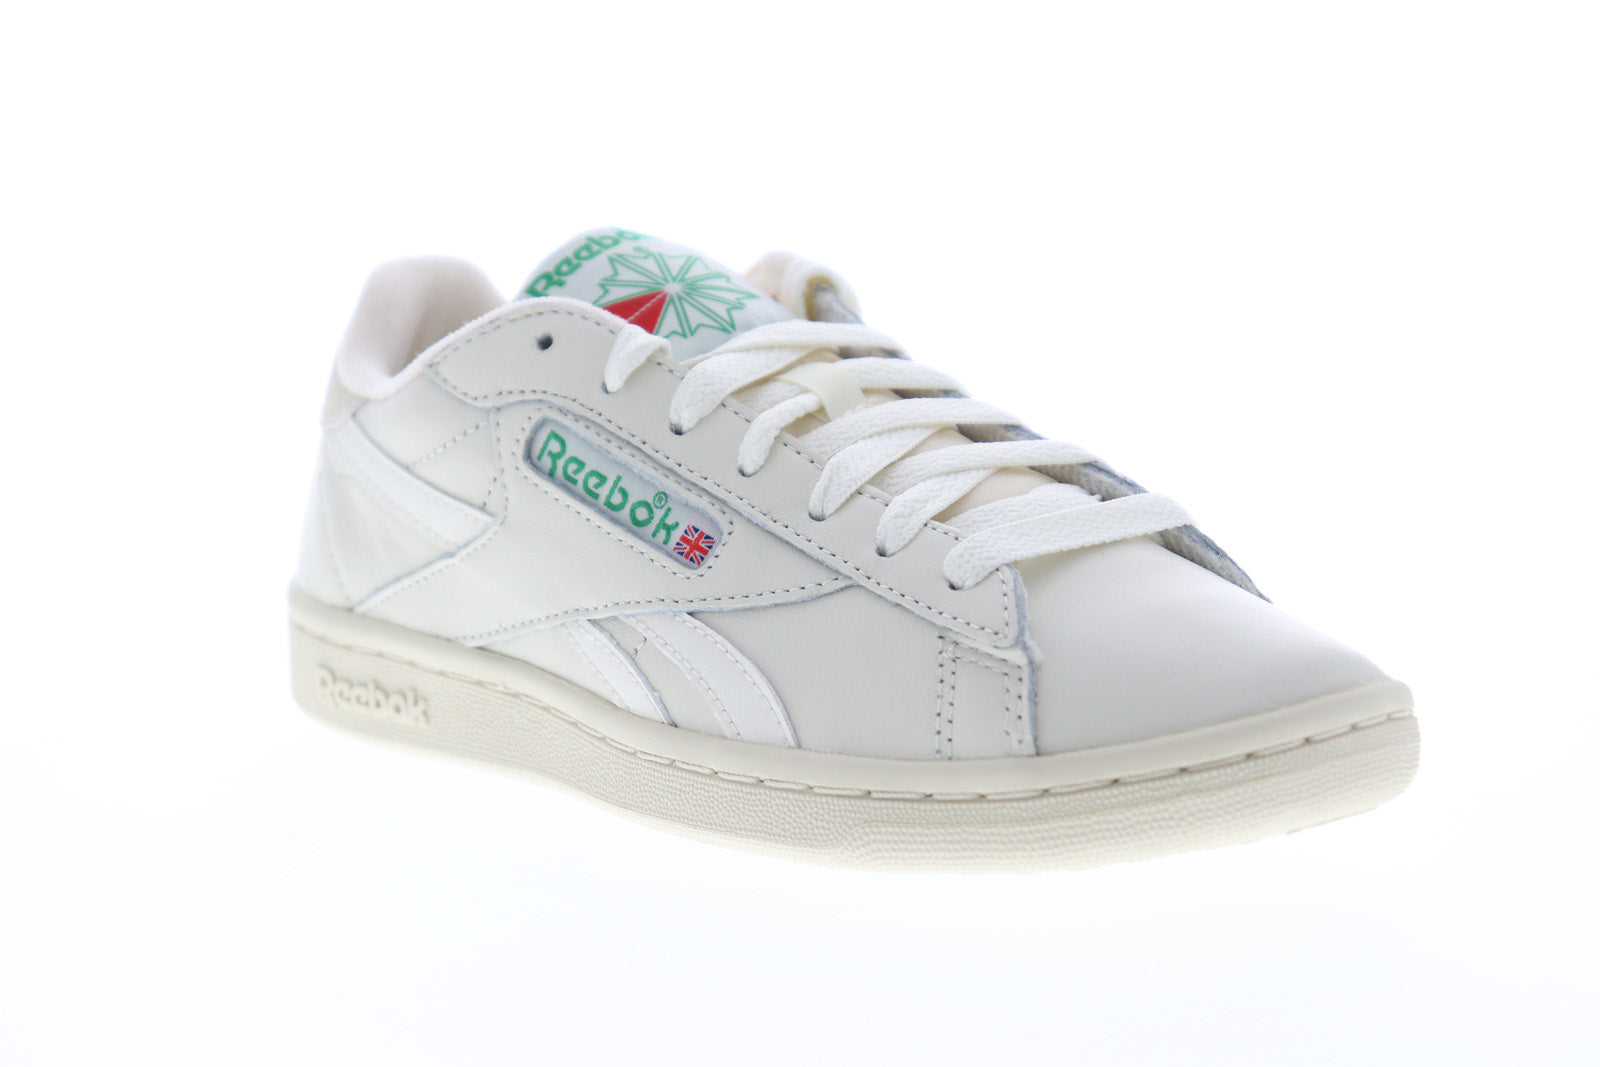 Ladder Jong invoeren Reebok NPC UK DV5585 Womens White Leather Low Top Lifestyle Sneakers S -  Ruze Shoes